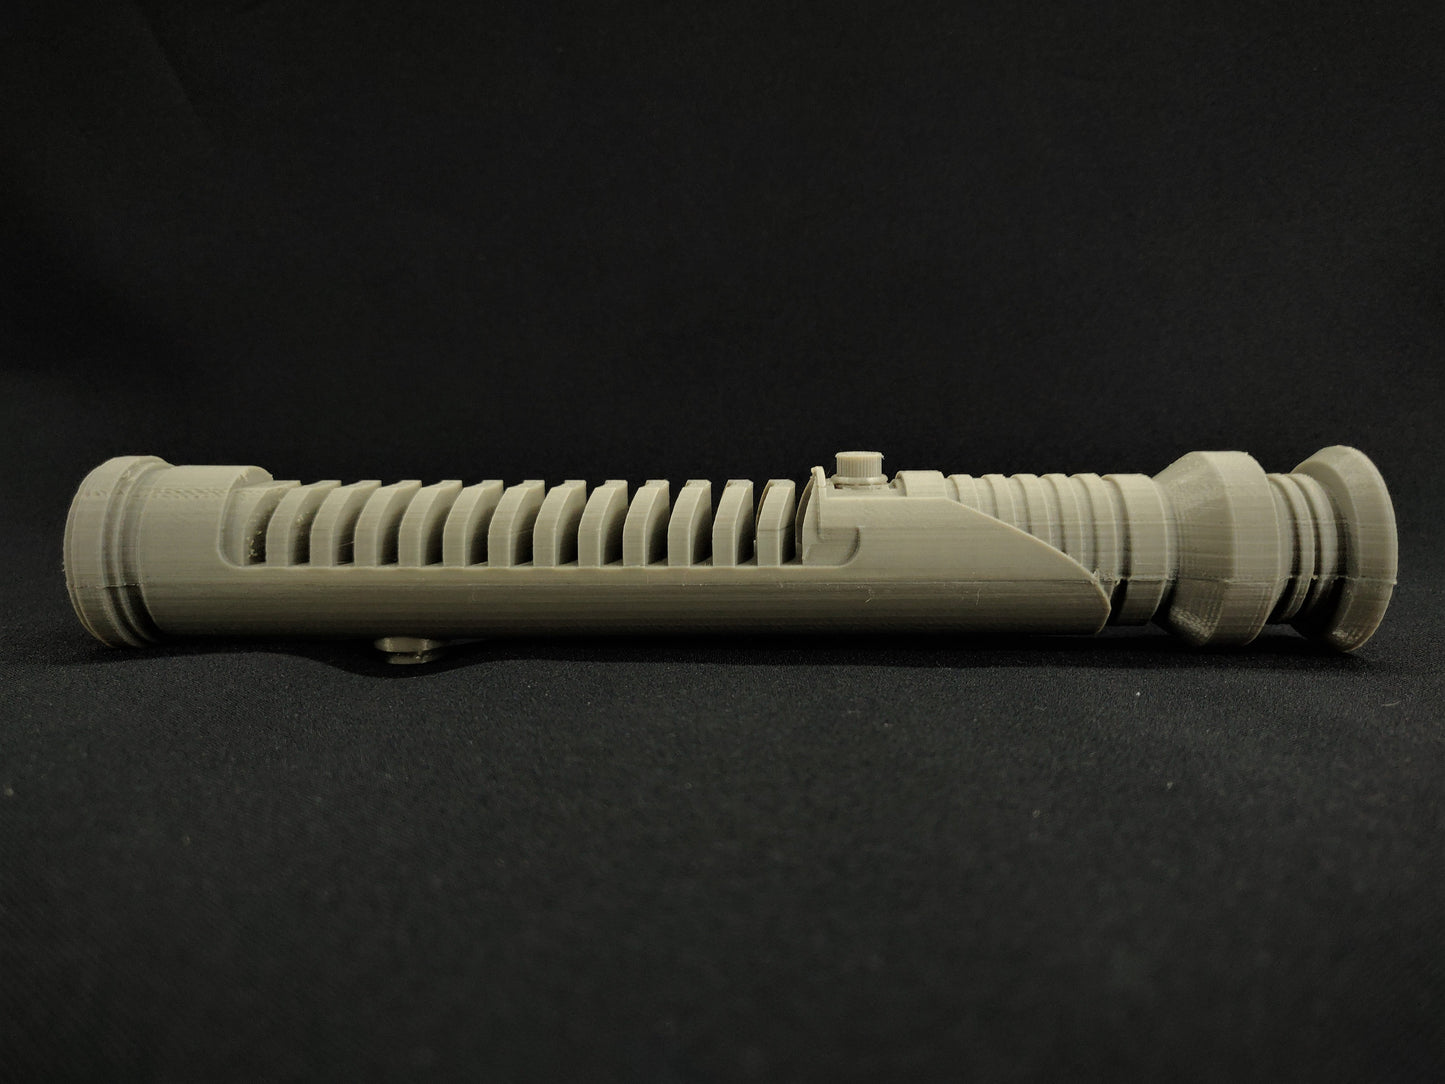 QUI-GON - Laser Sword Hilt - 3D Printed Replica